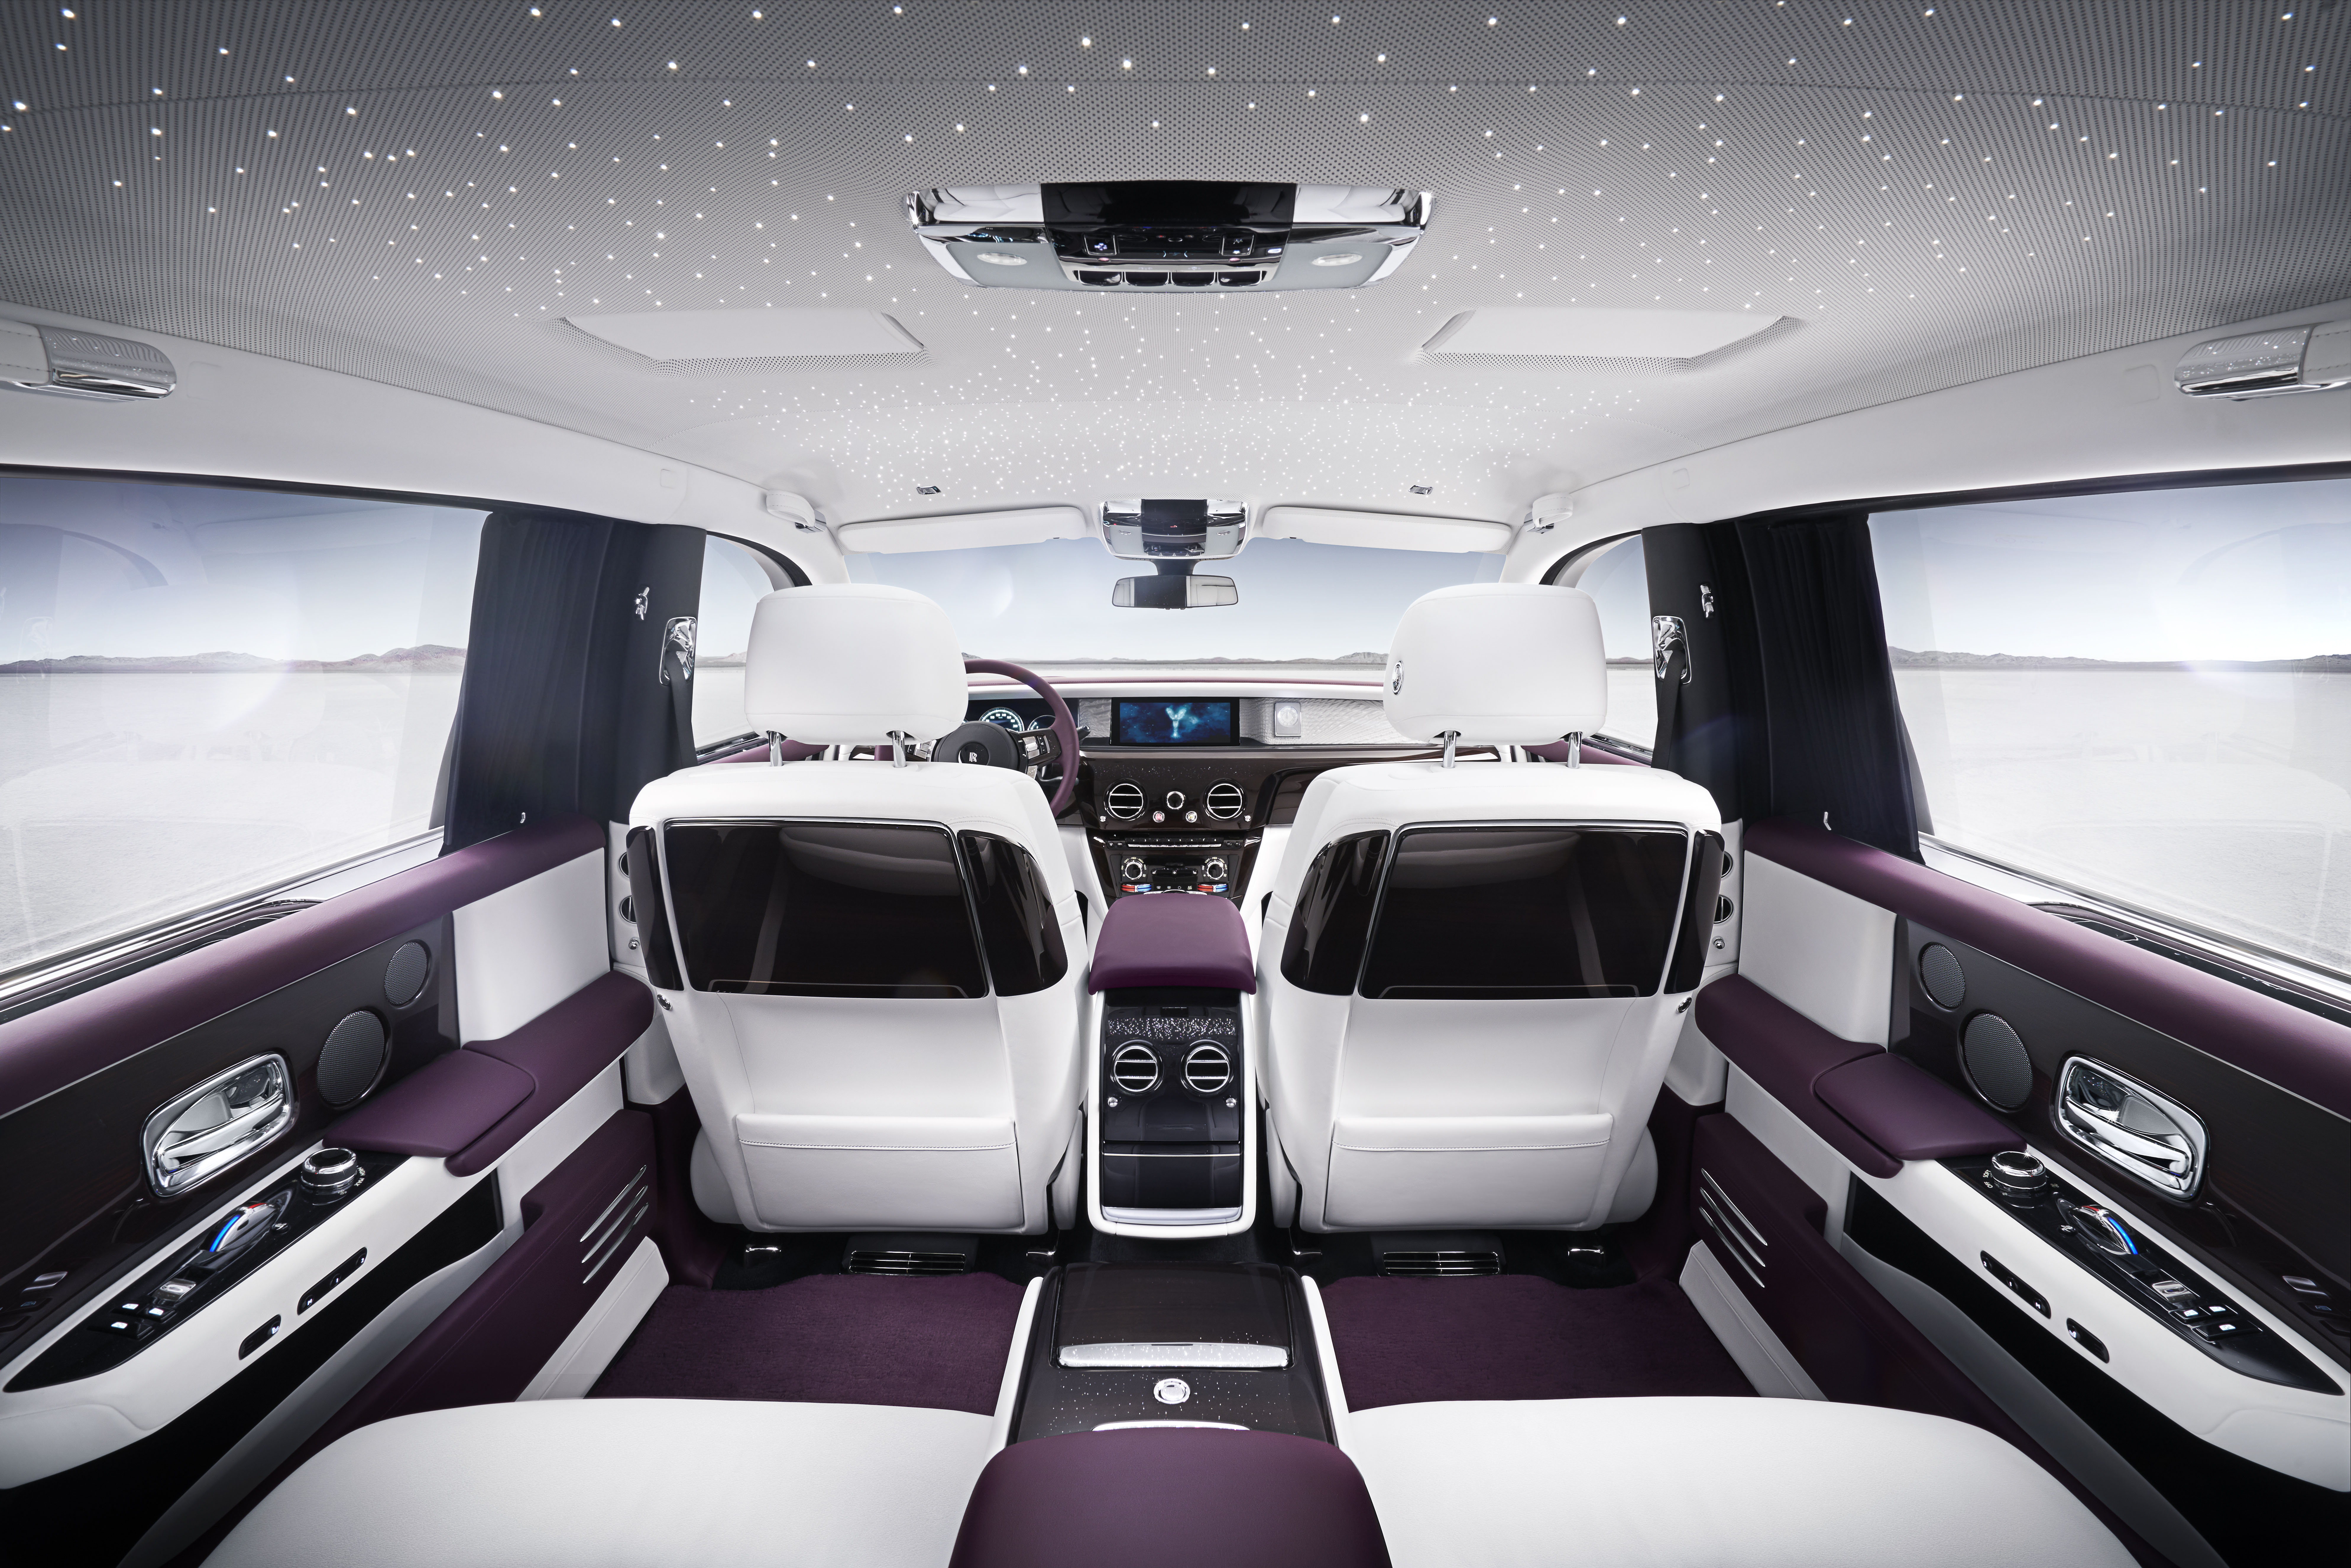 Rolls Royce's New Phantom VIII: The Best car in the world